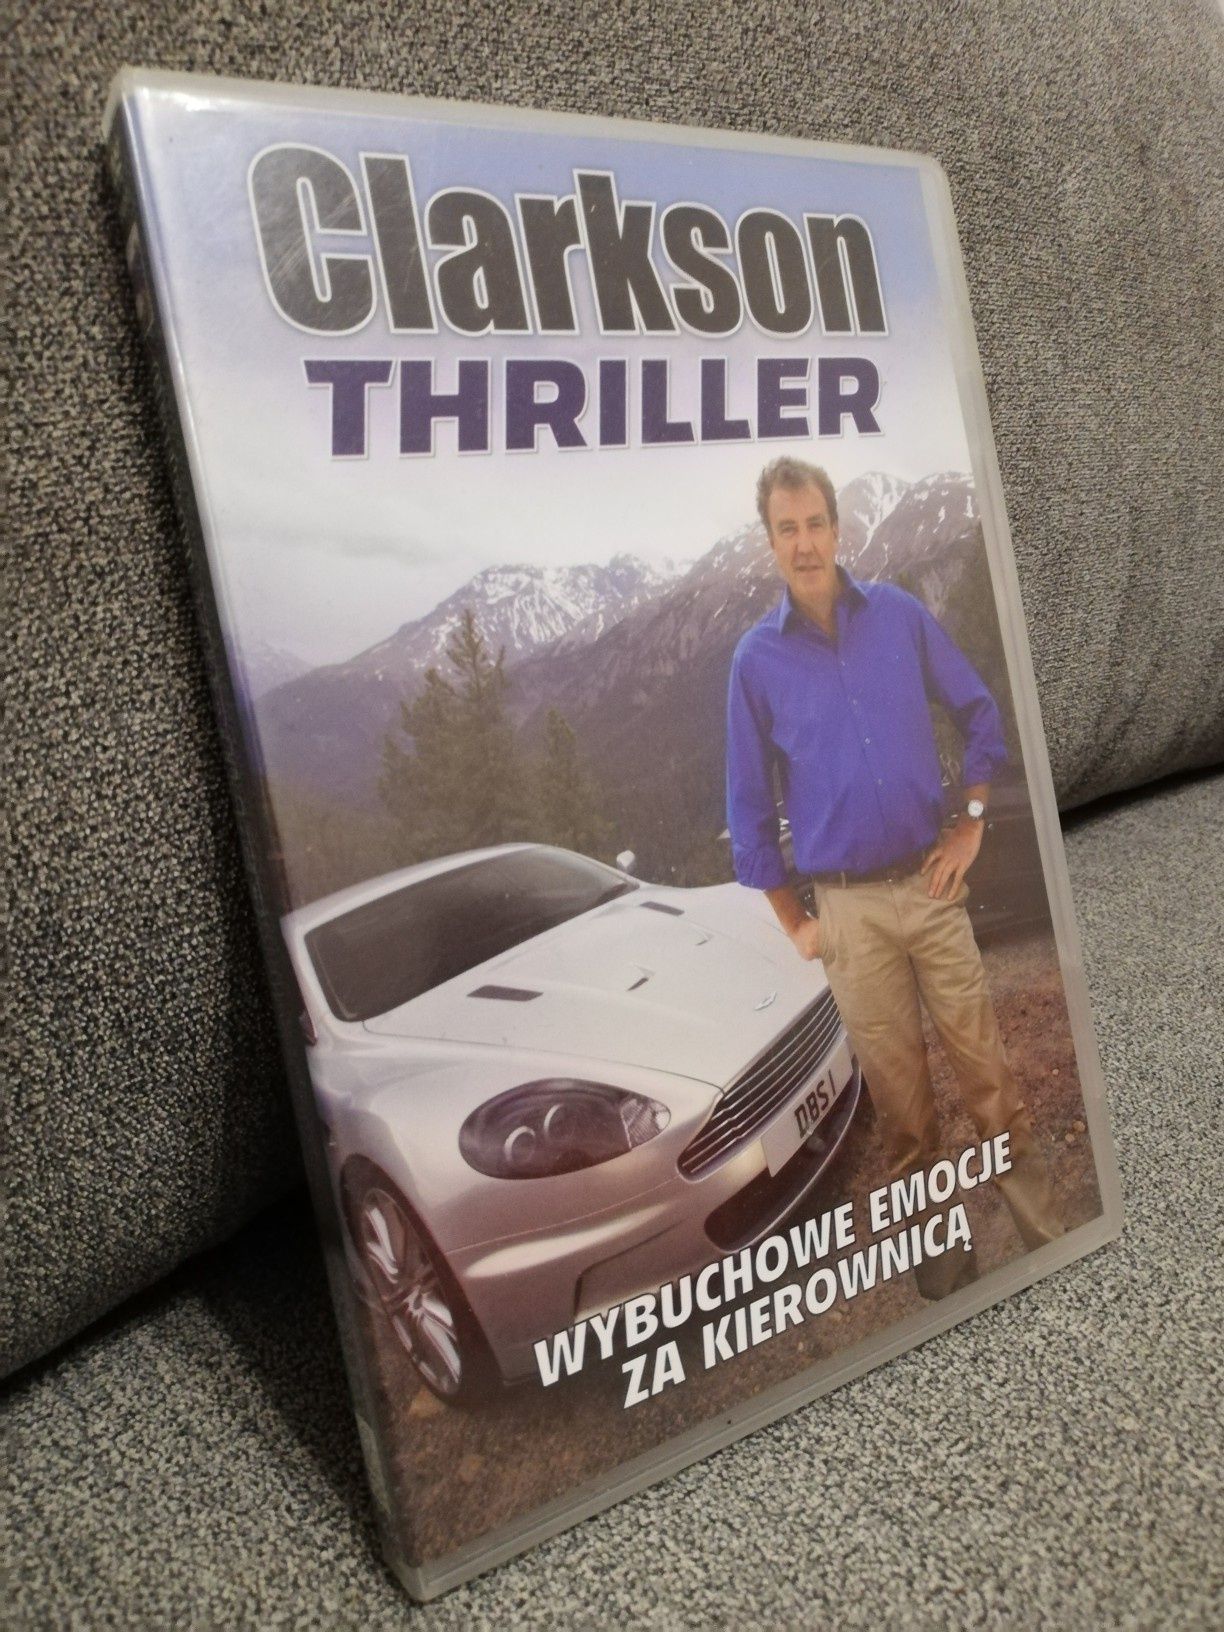 Clarkson Thiller DVD